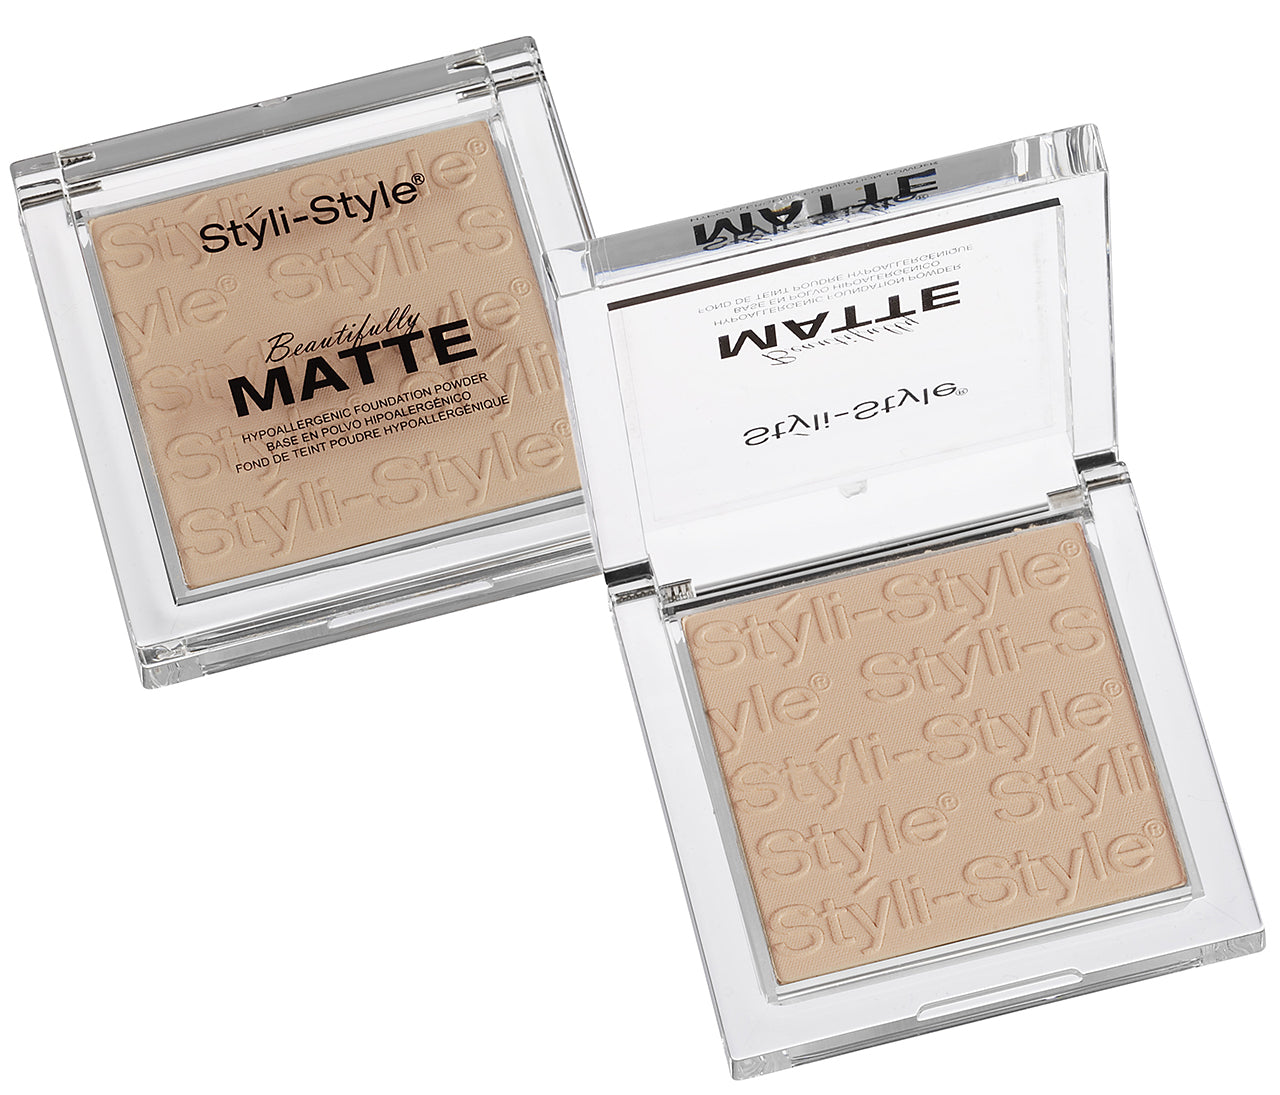 Styli-Style Cosmetics Beautifully Matte, Powder - Cool Beige - ADDROS.COM